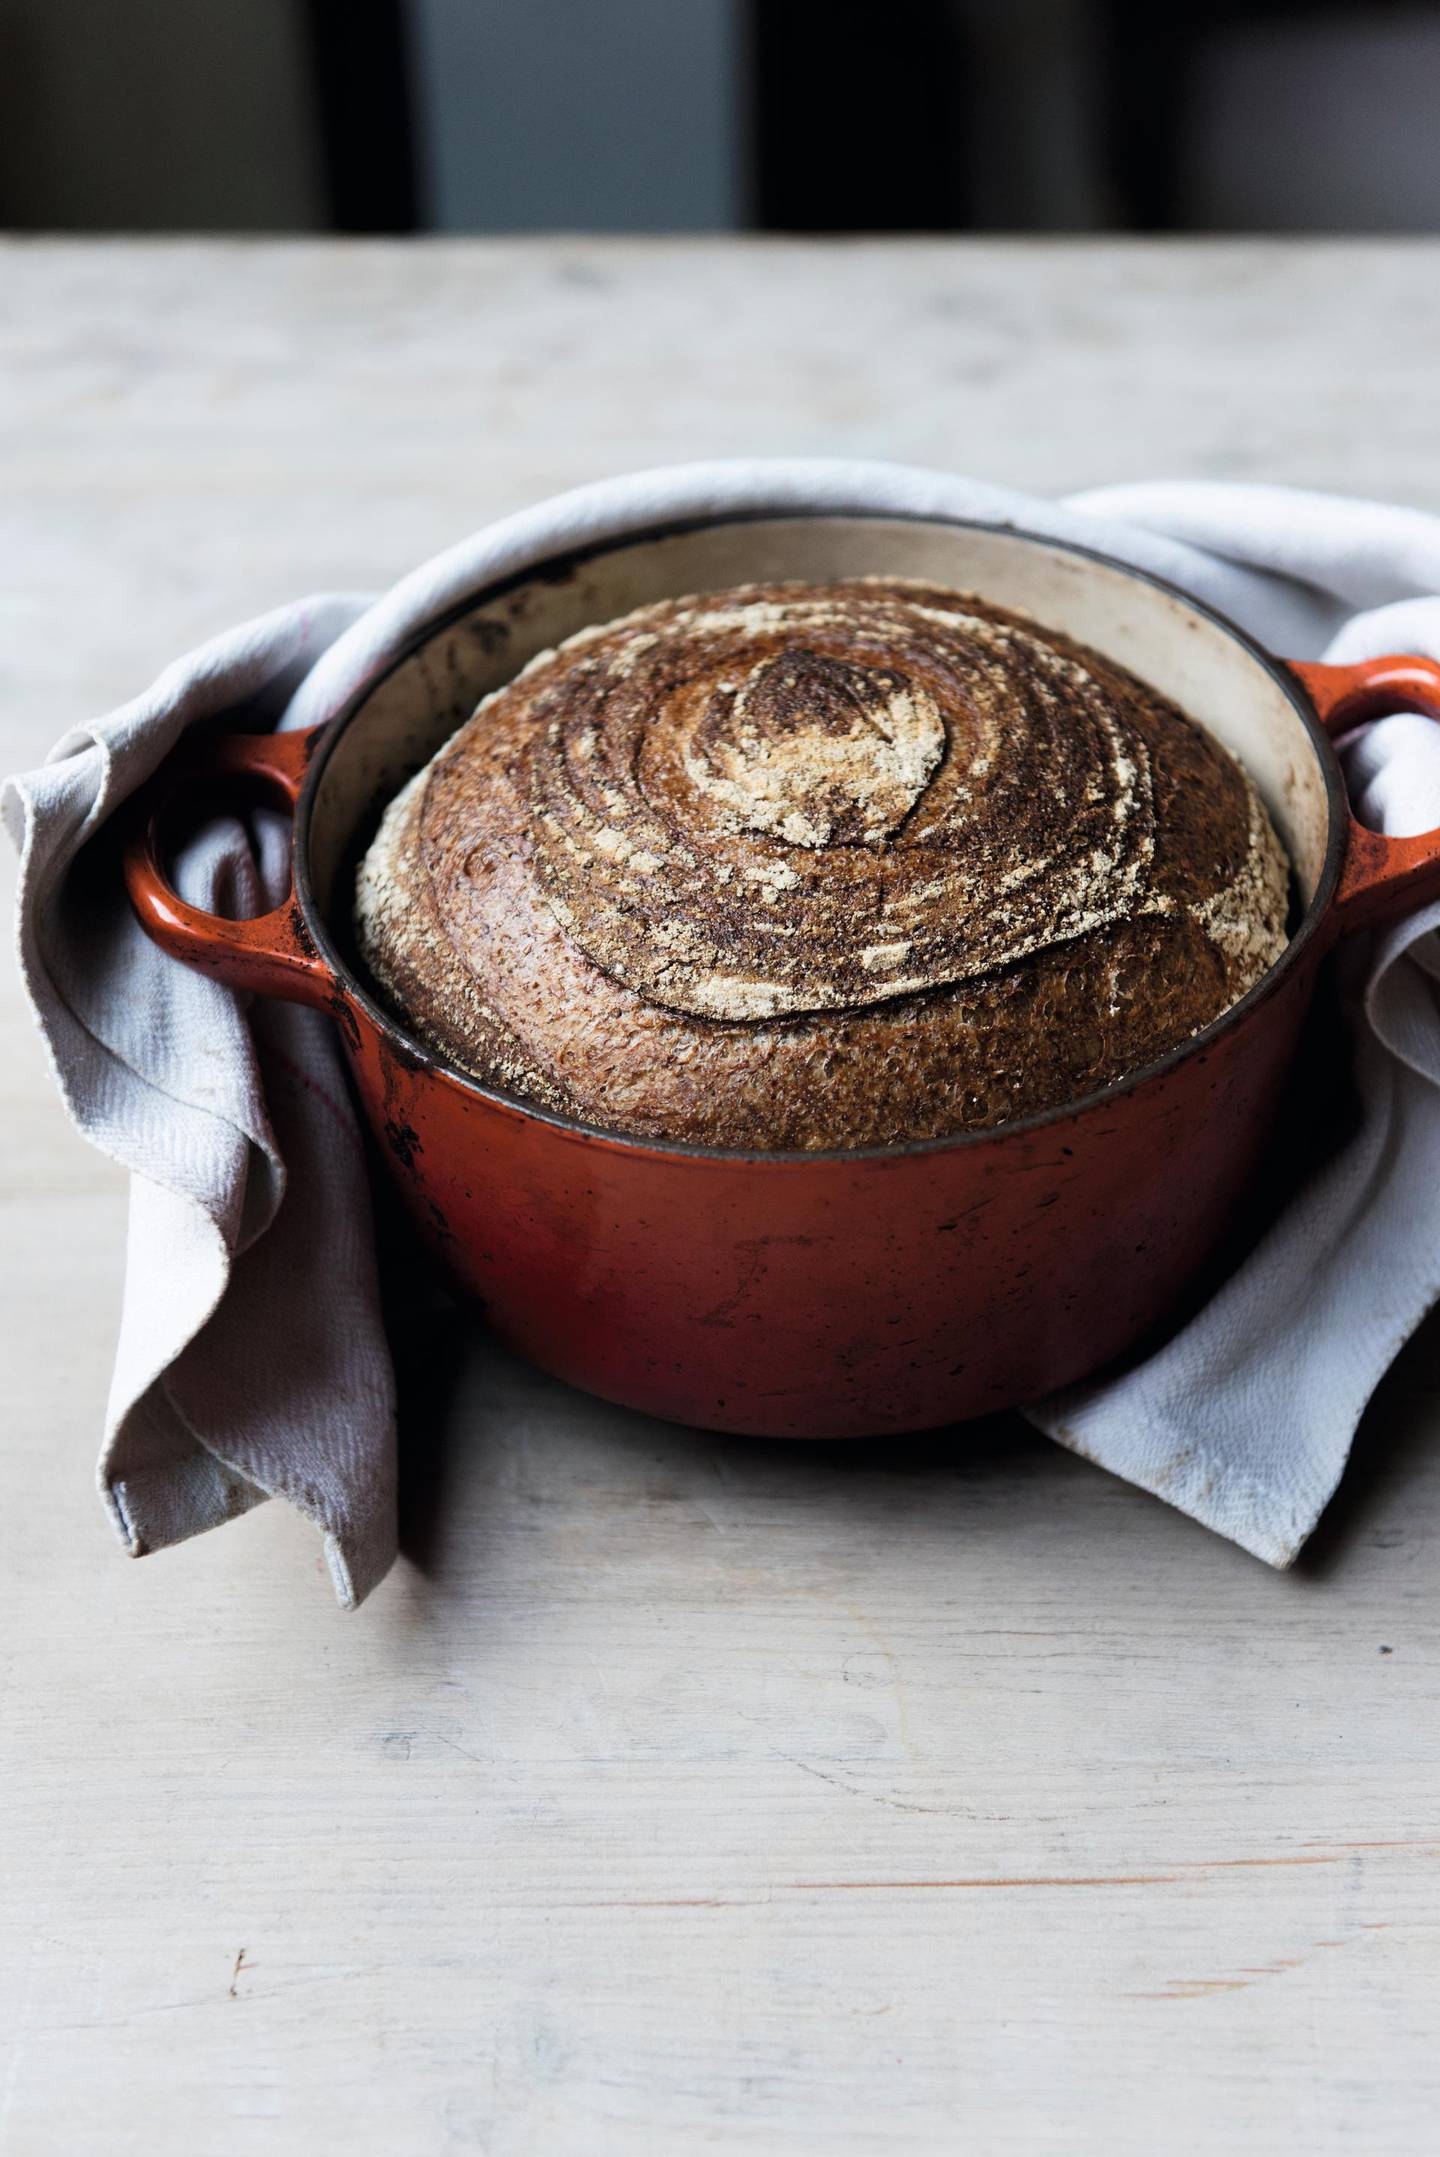 Courtesy Baking School, The Bread Ahead Cookbook